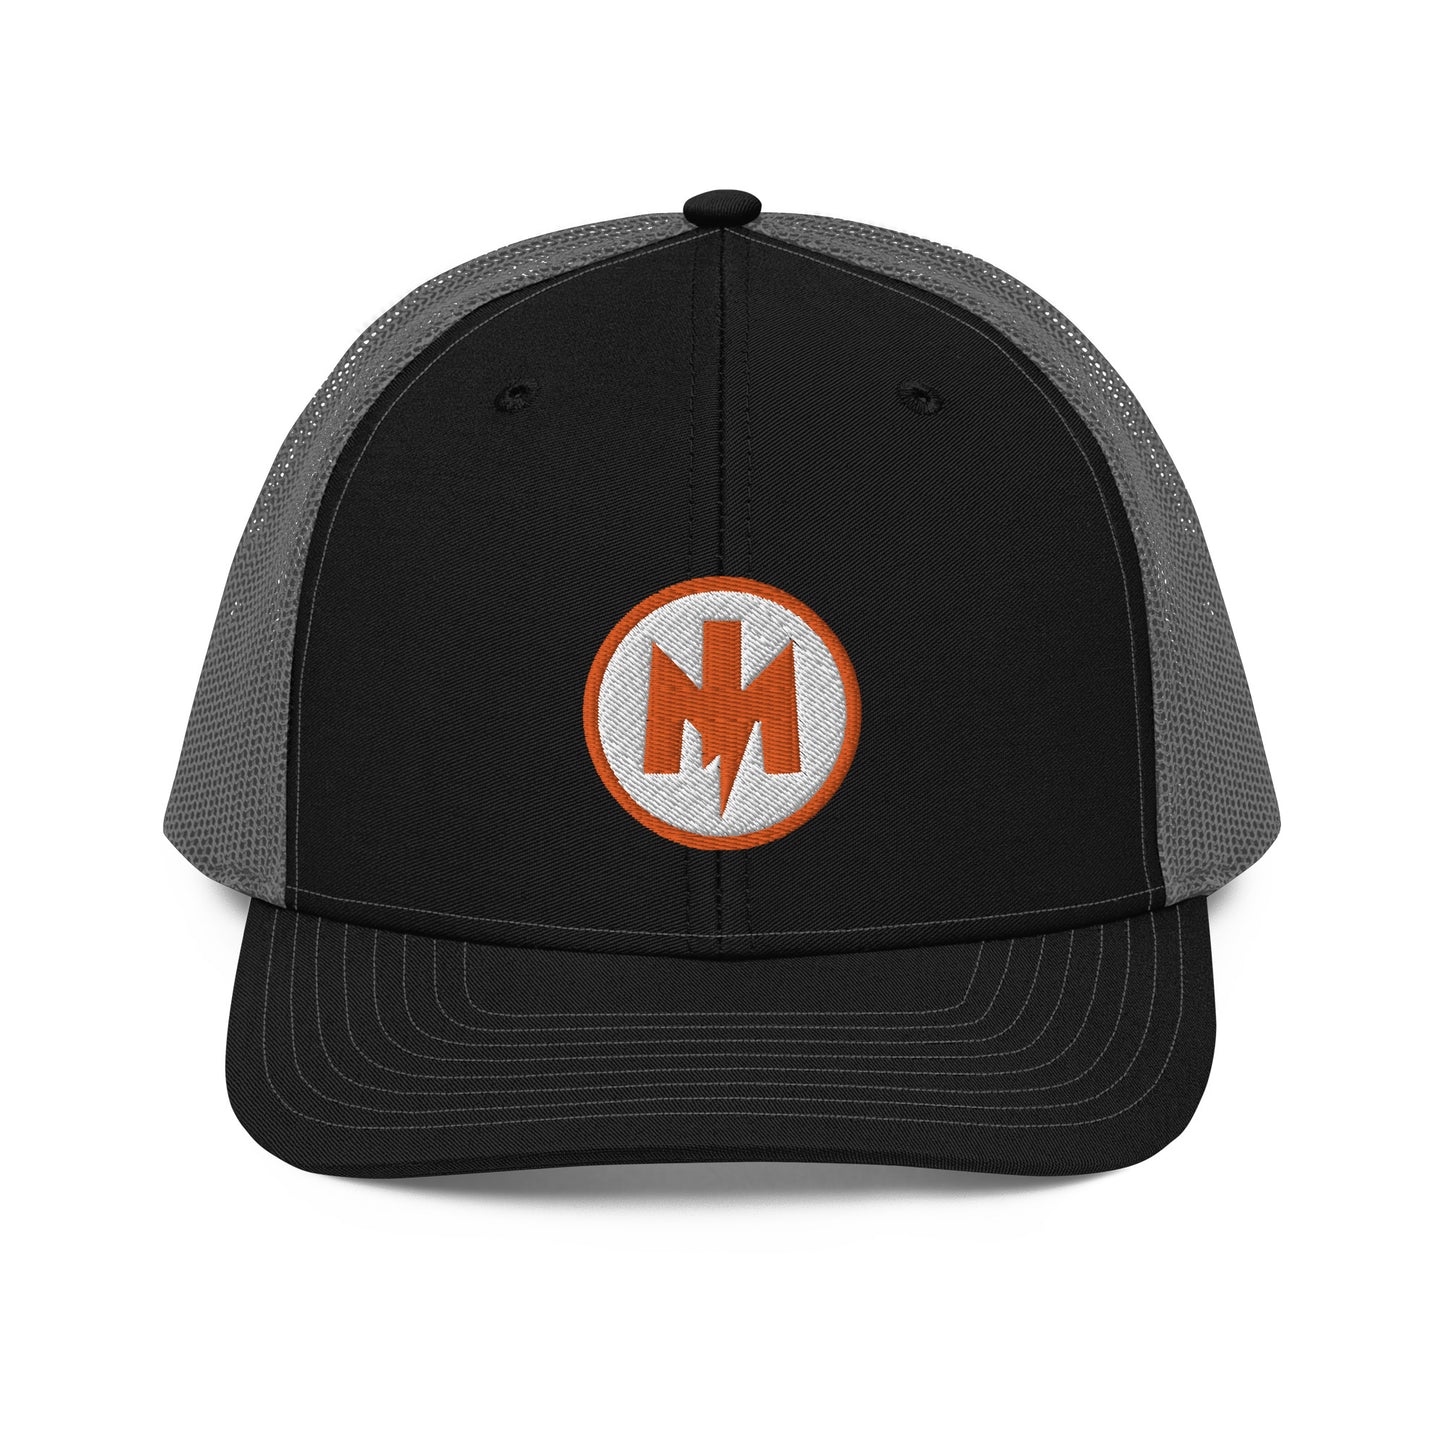 MotoIconic Embroidered Trucker Cap